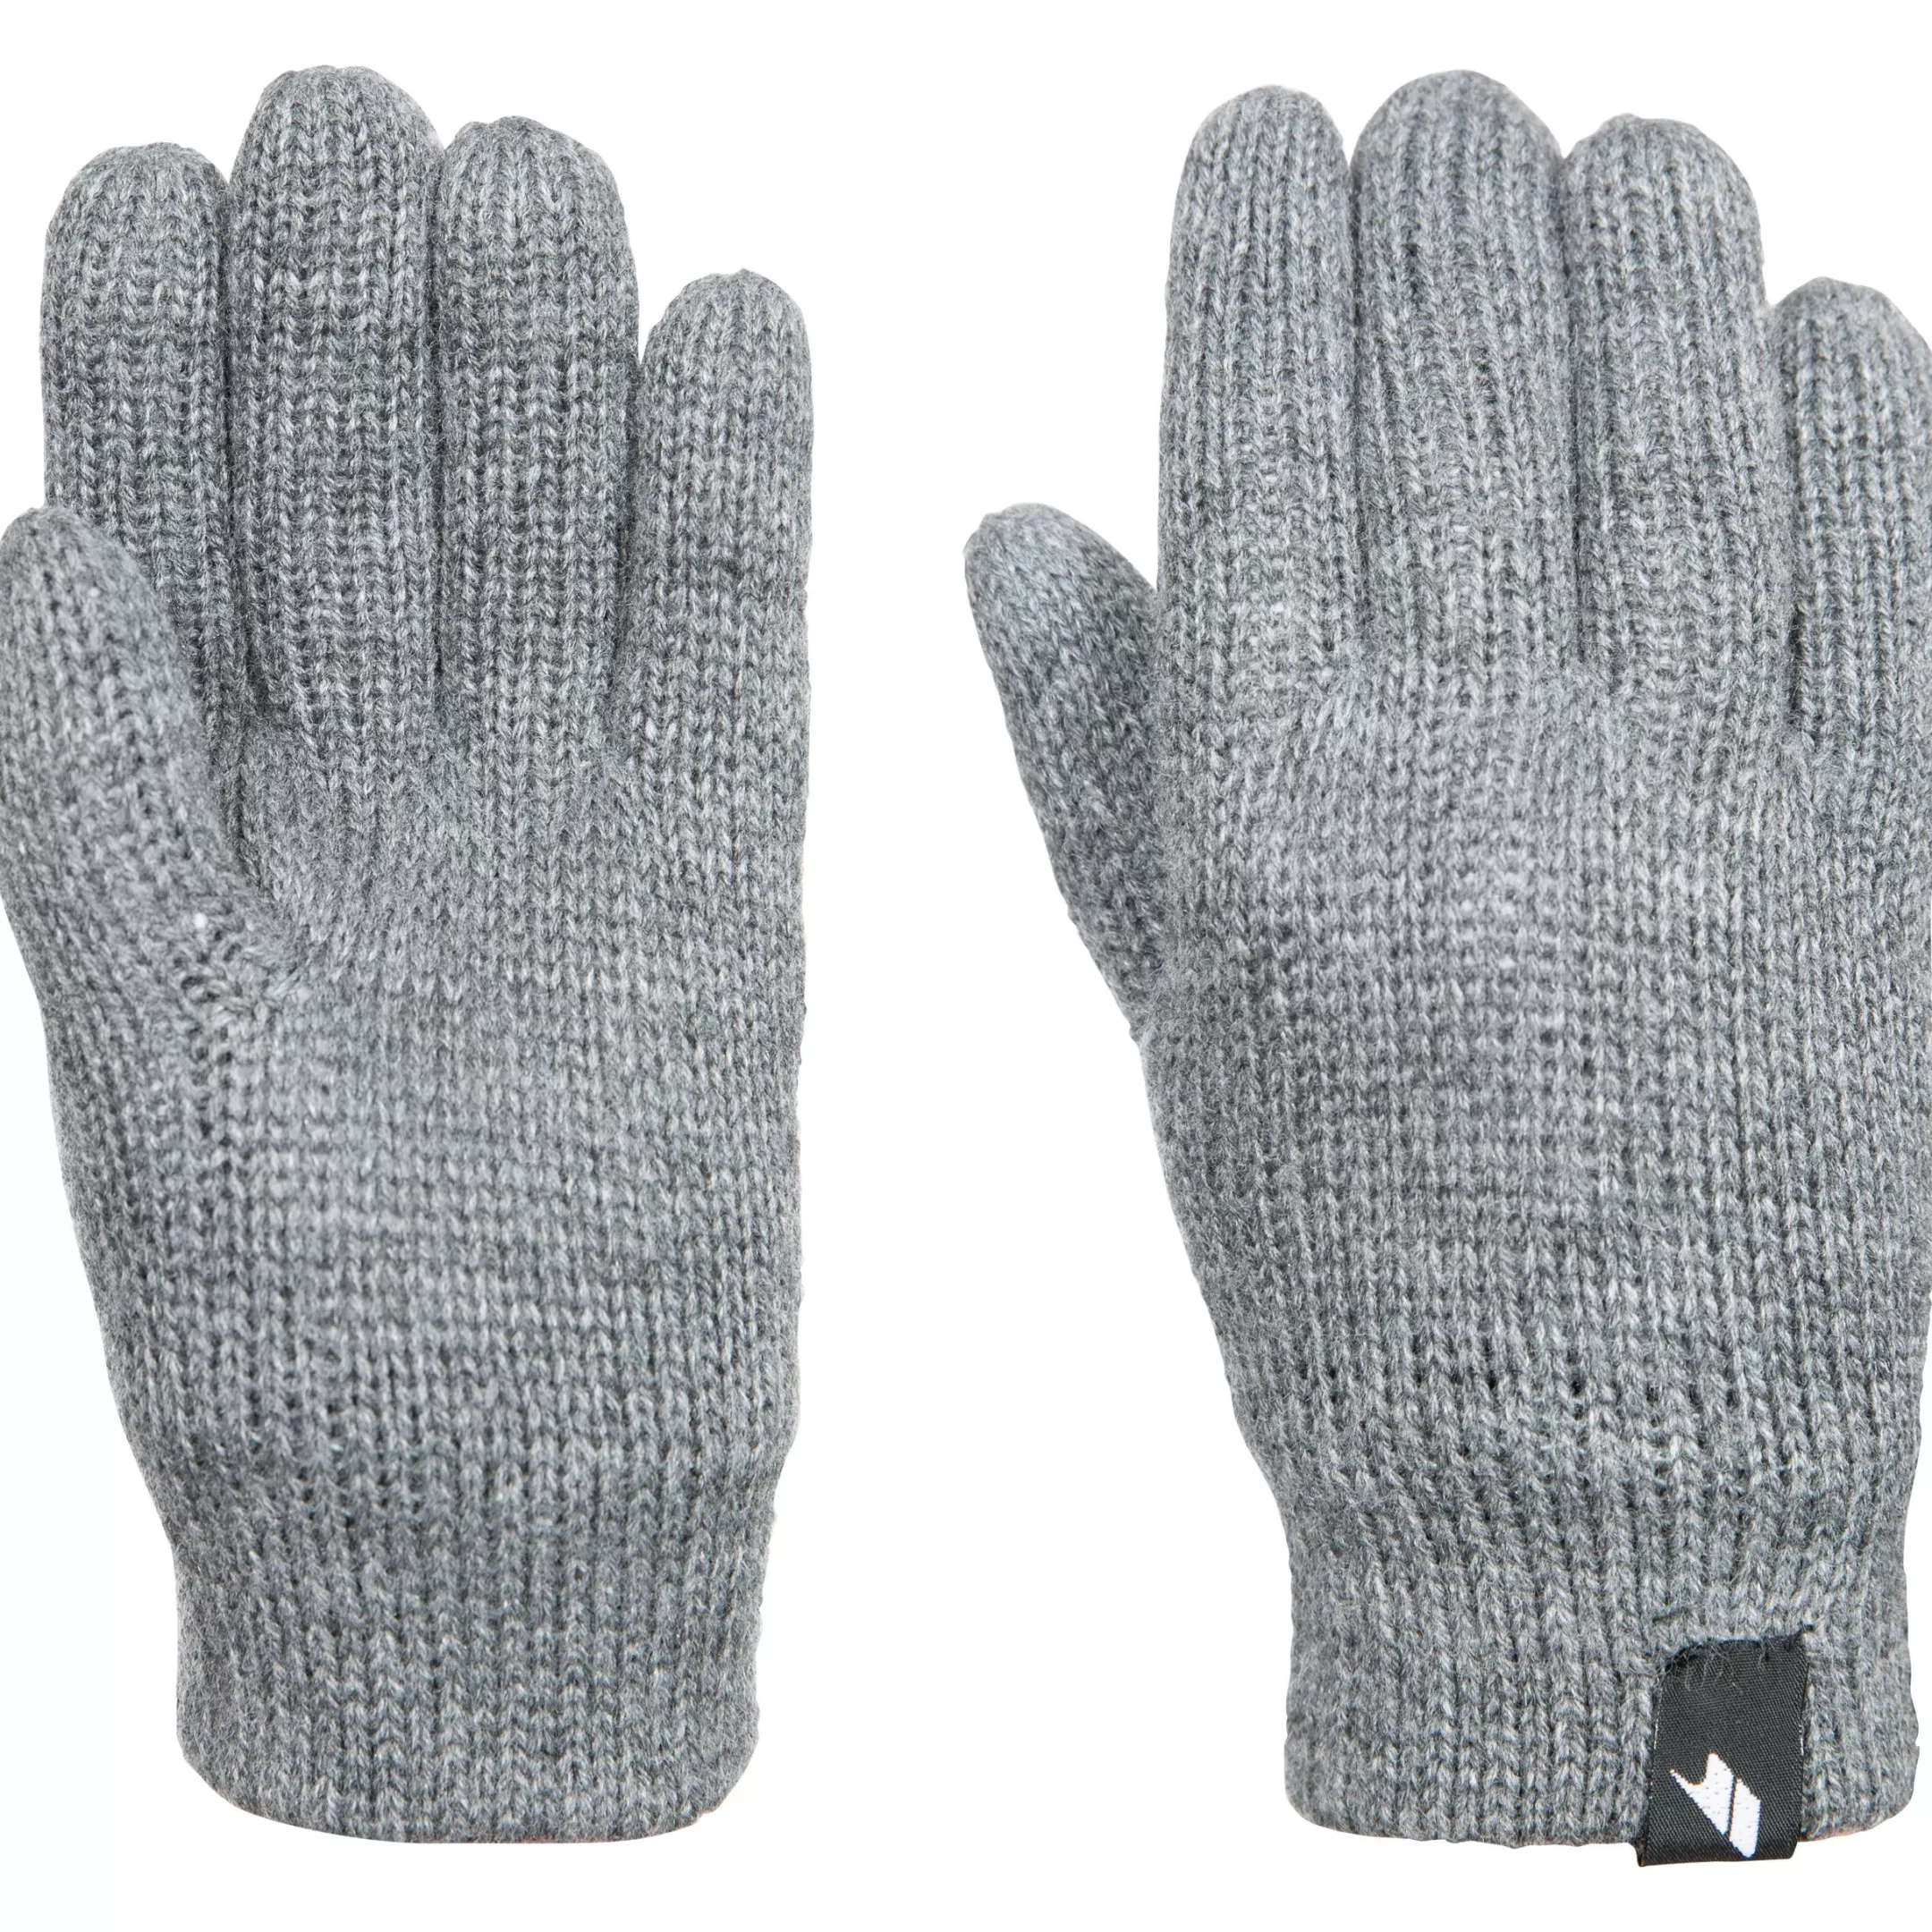 Kids' Knitted Gloves Bargo | Trespass Hot